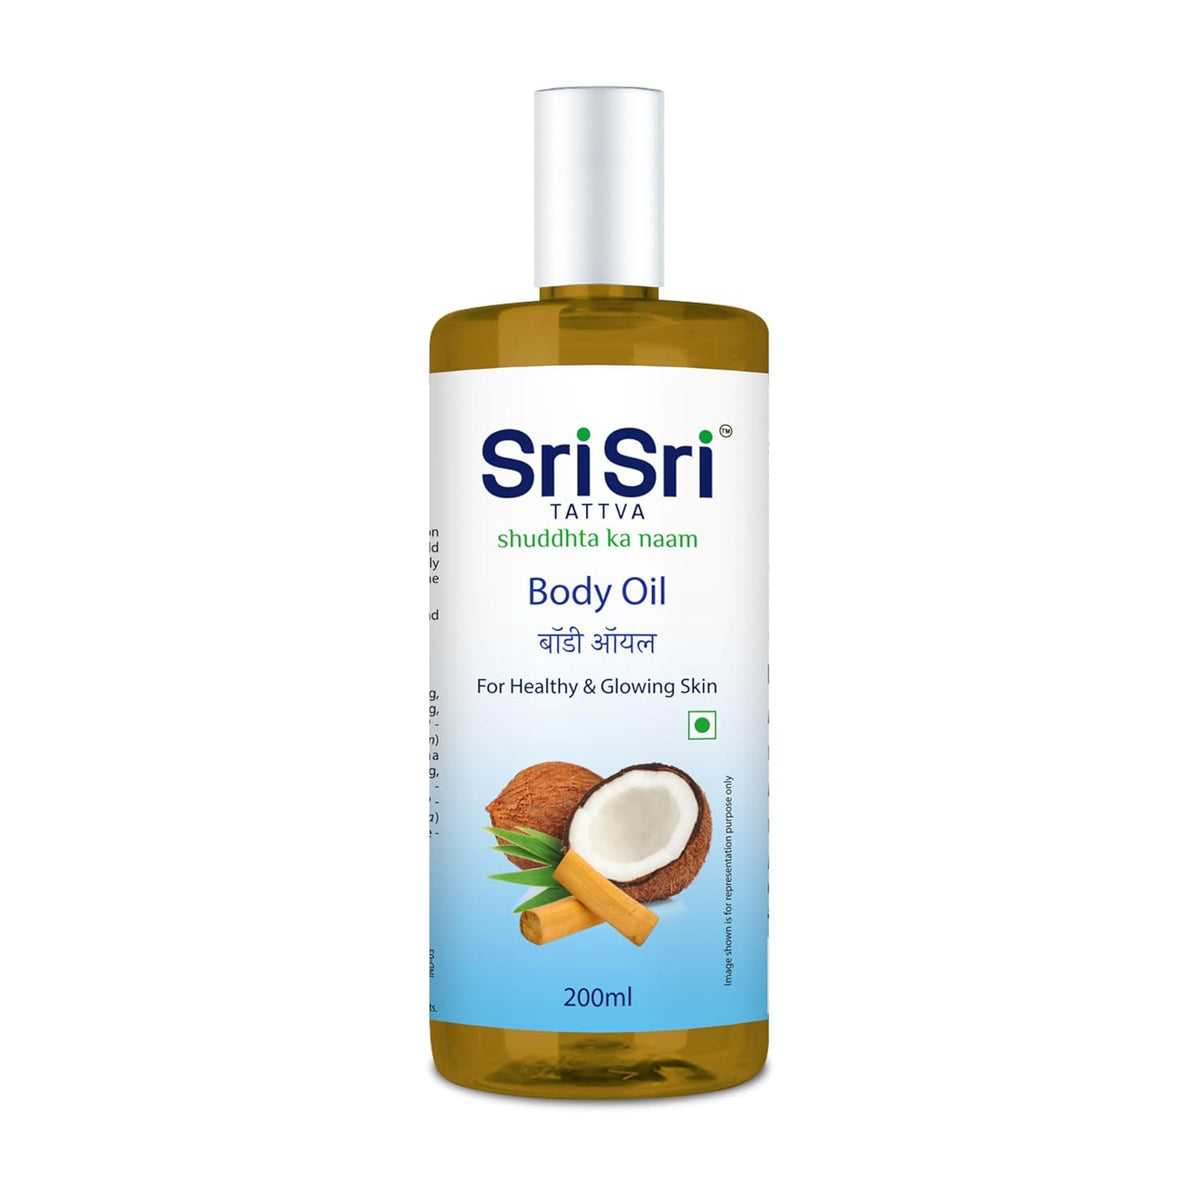 Sri Sri Tattva Ayurvedic Body For Healthy & Glowing Skin Oil 200ml